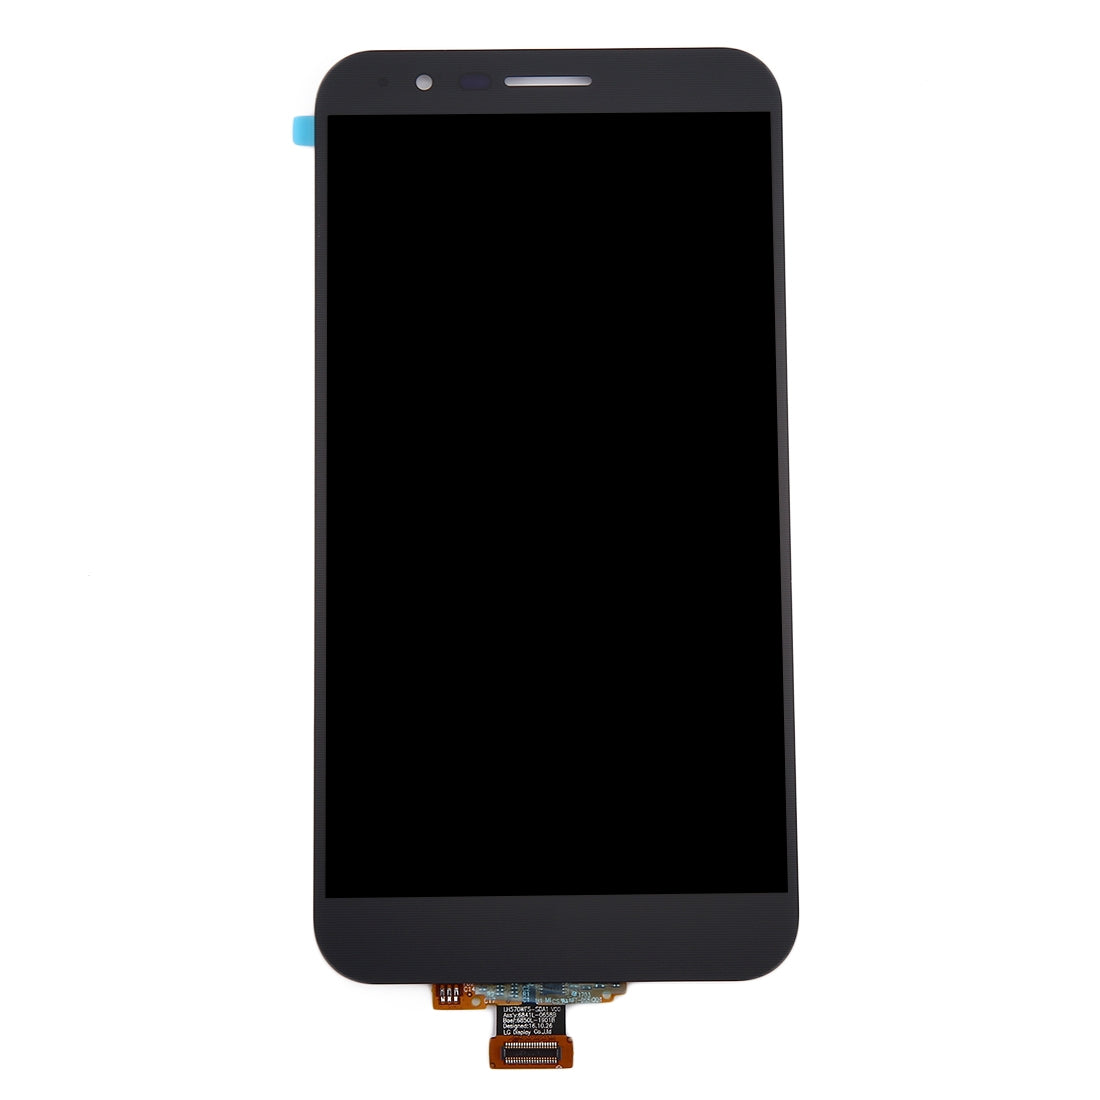 Pantalla LCD + Tactil Digitalizador LG Stylo 3 Plus TP450 MP450 Negro